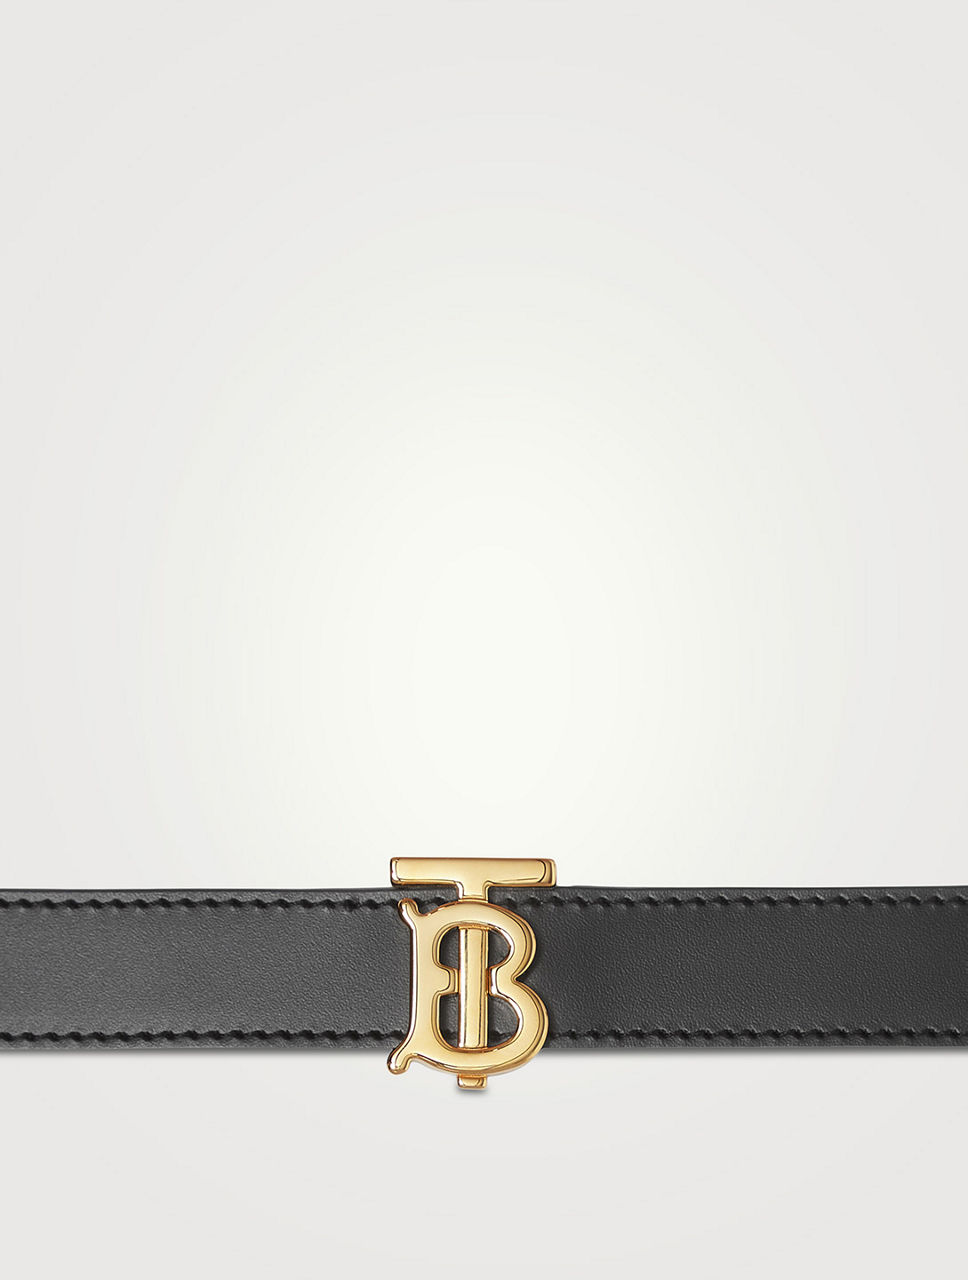 Burberry Leather Reversible Tb Belt - Black/tan/light Gold